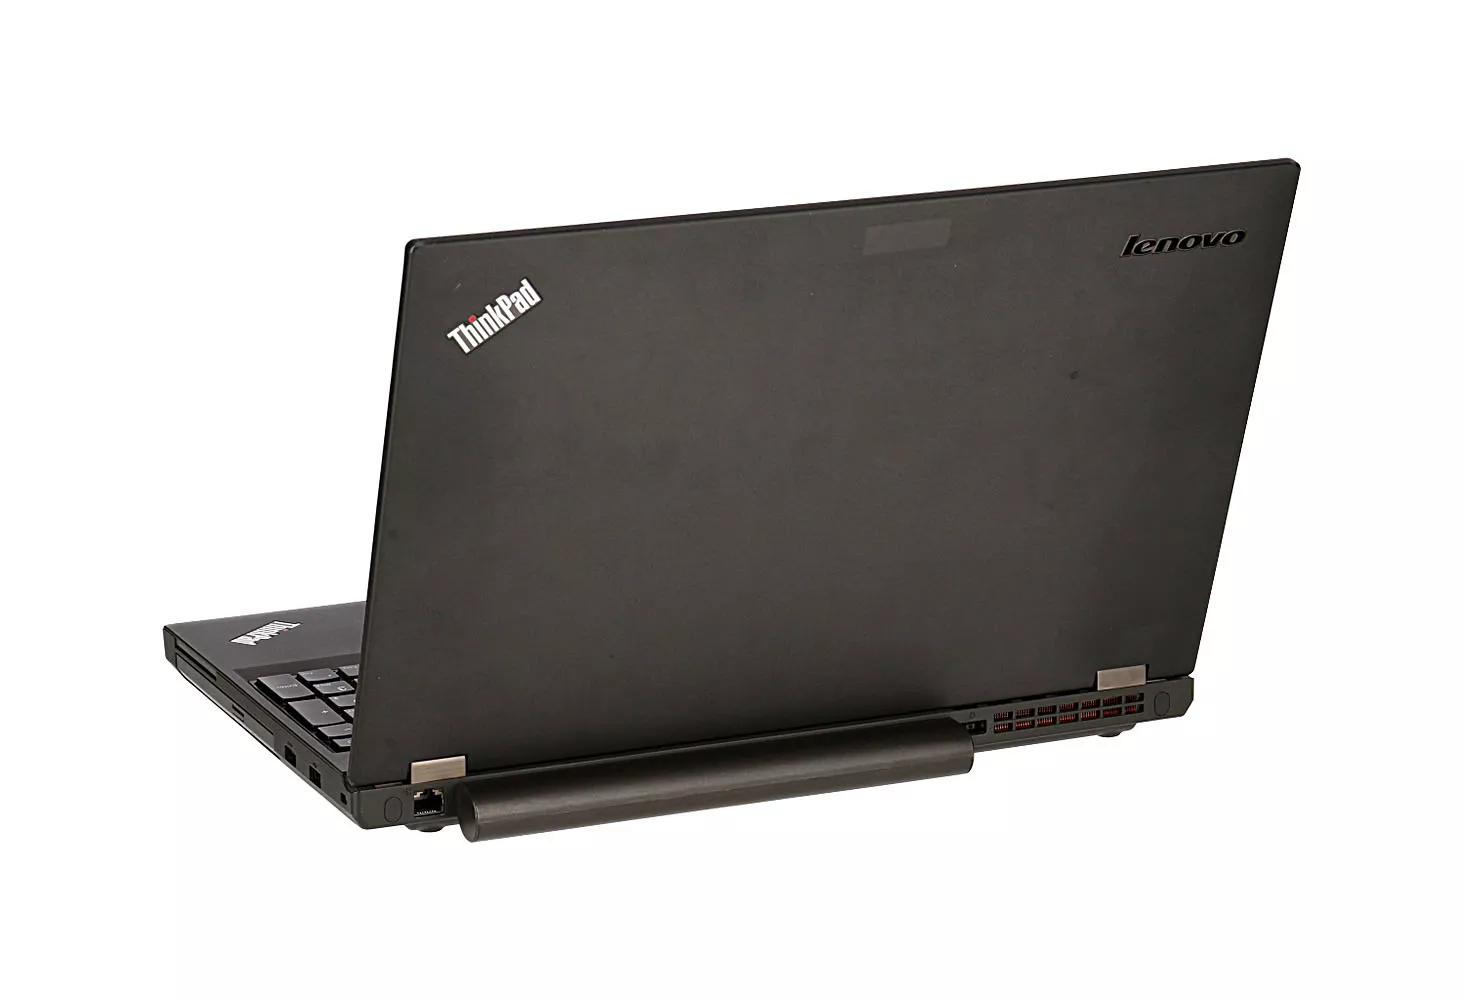 Lenovo ThinkPad W540 Core i7 4600M 2,9 GHz Webcam